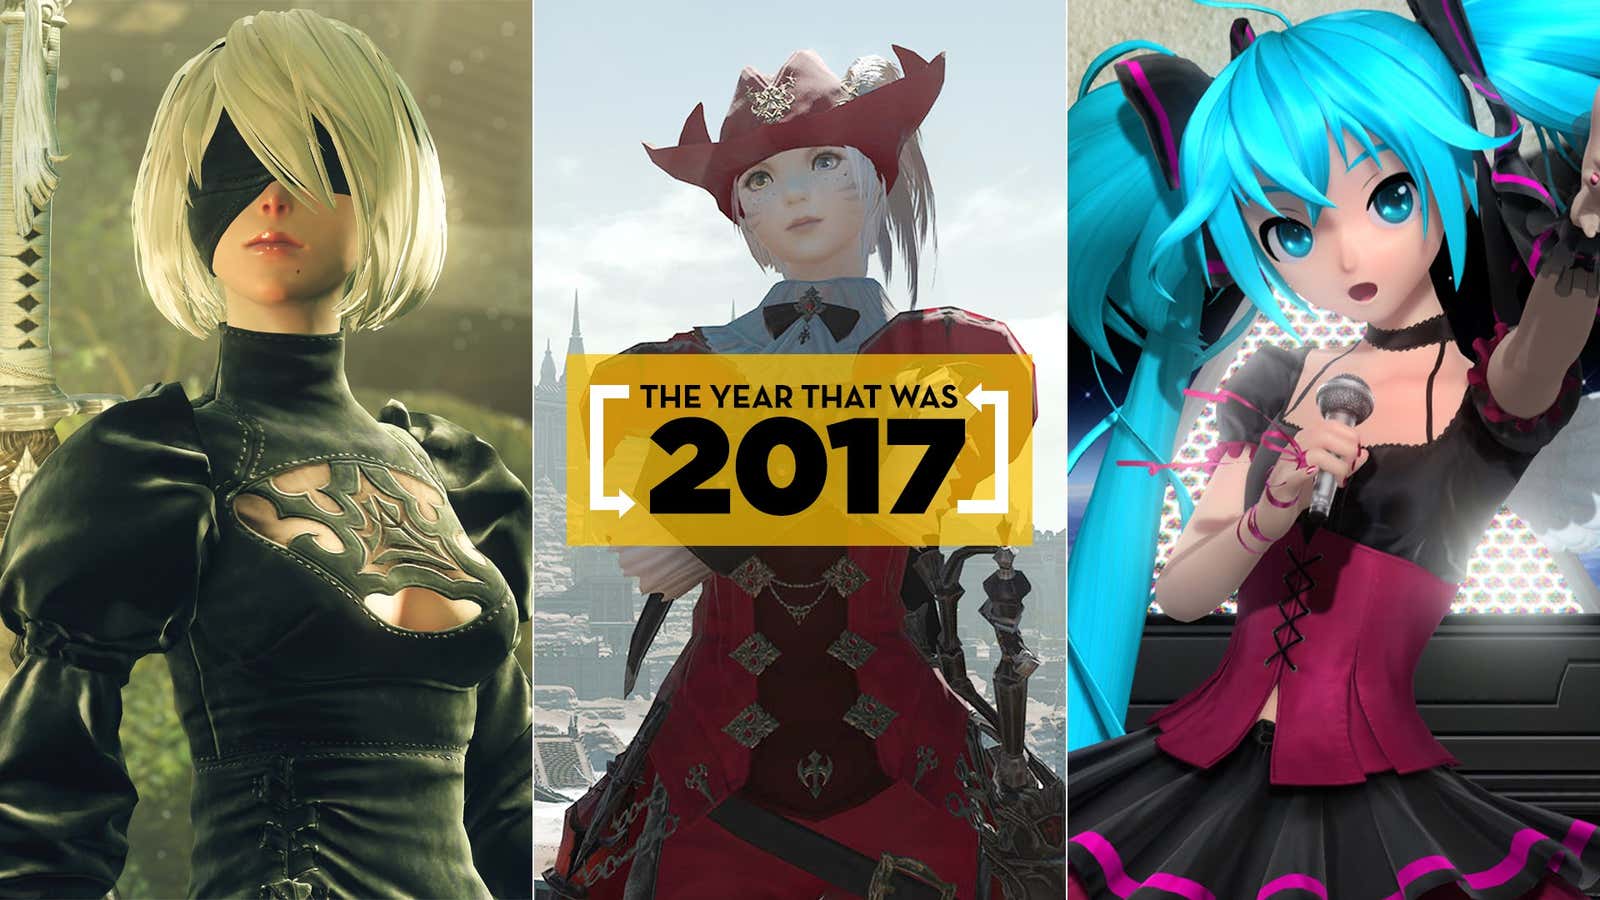 Top 10  Gamers of 2017